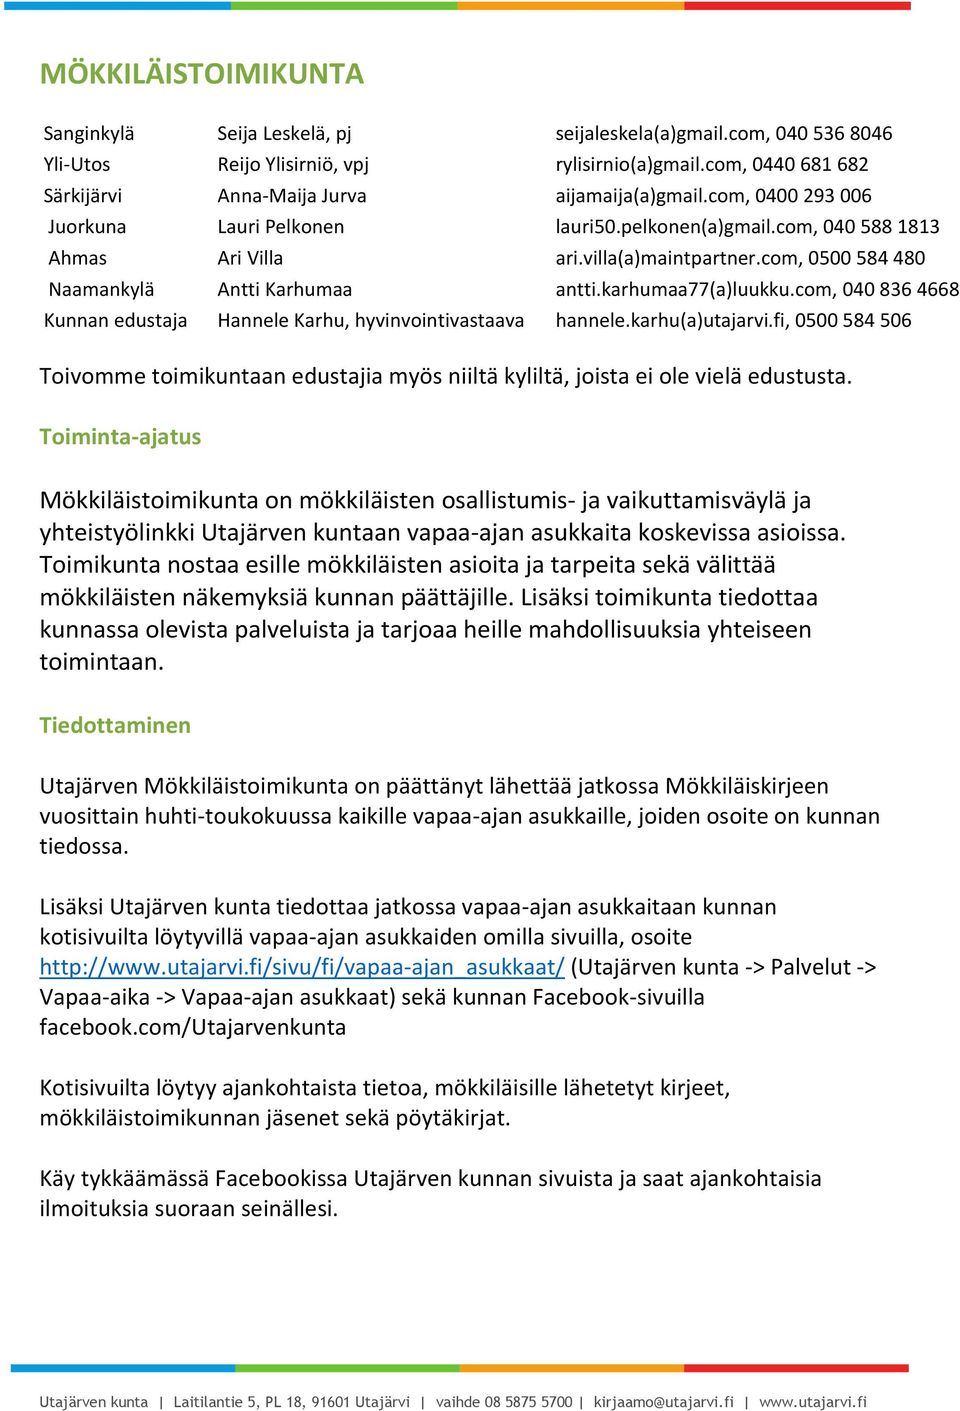 com, 0500 584 480 Naamankylä Antti Karhumaa antti.karhumaa77(a)luukku.com, 040 836 4668 Kunnan edustaja Hannele Karhu, hyvinvointivastaava hannele.karhu(a)utajarvi.